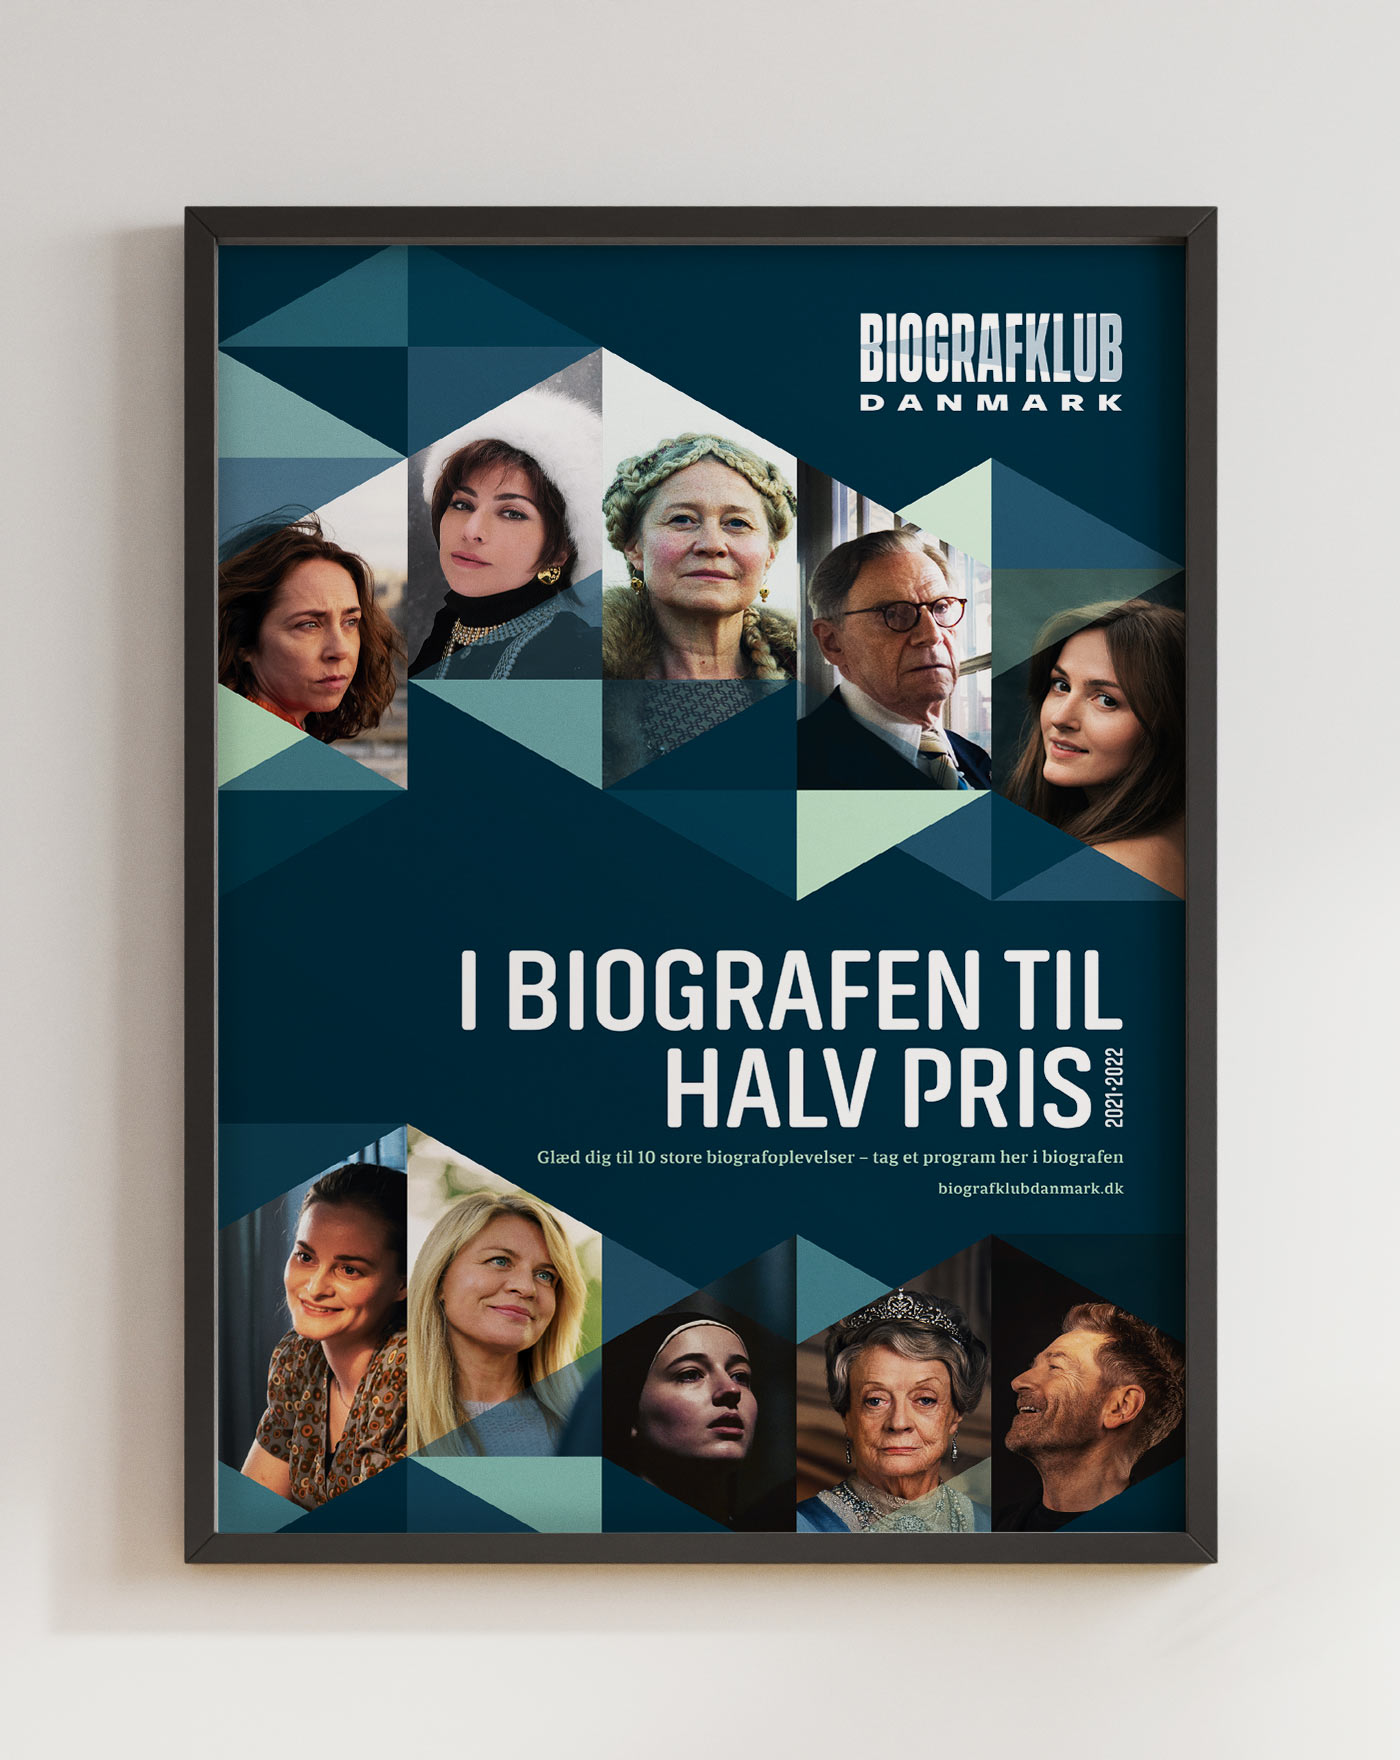 Grafisk Design - Bioplakat - Biografklub Danmark